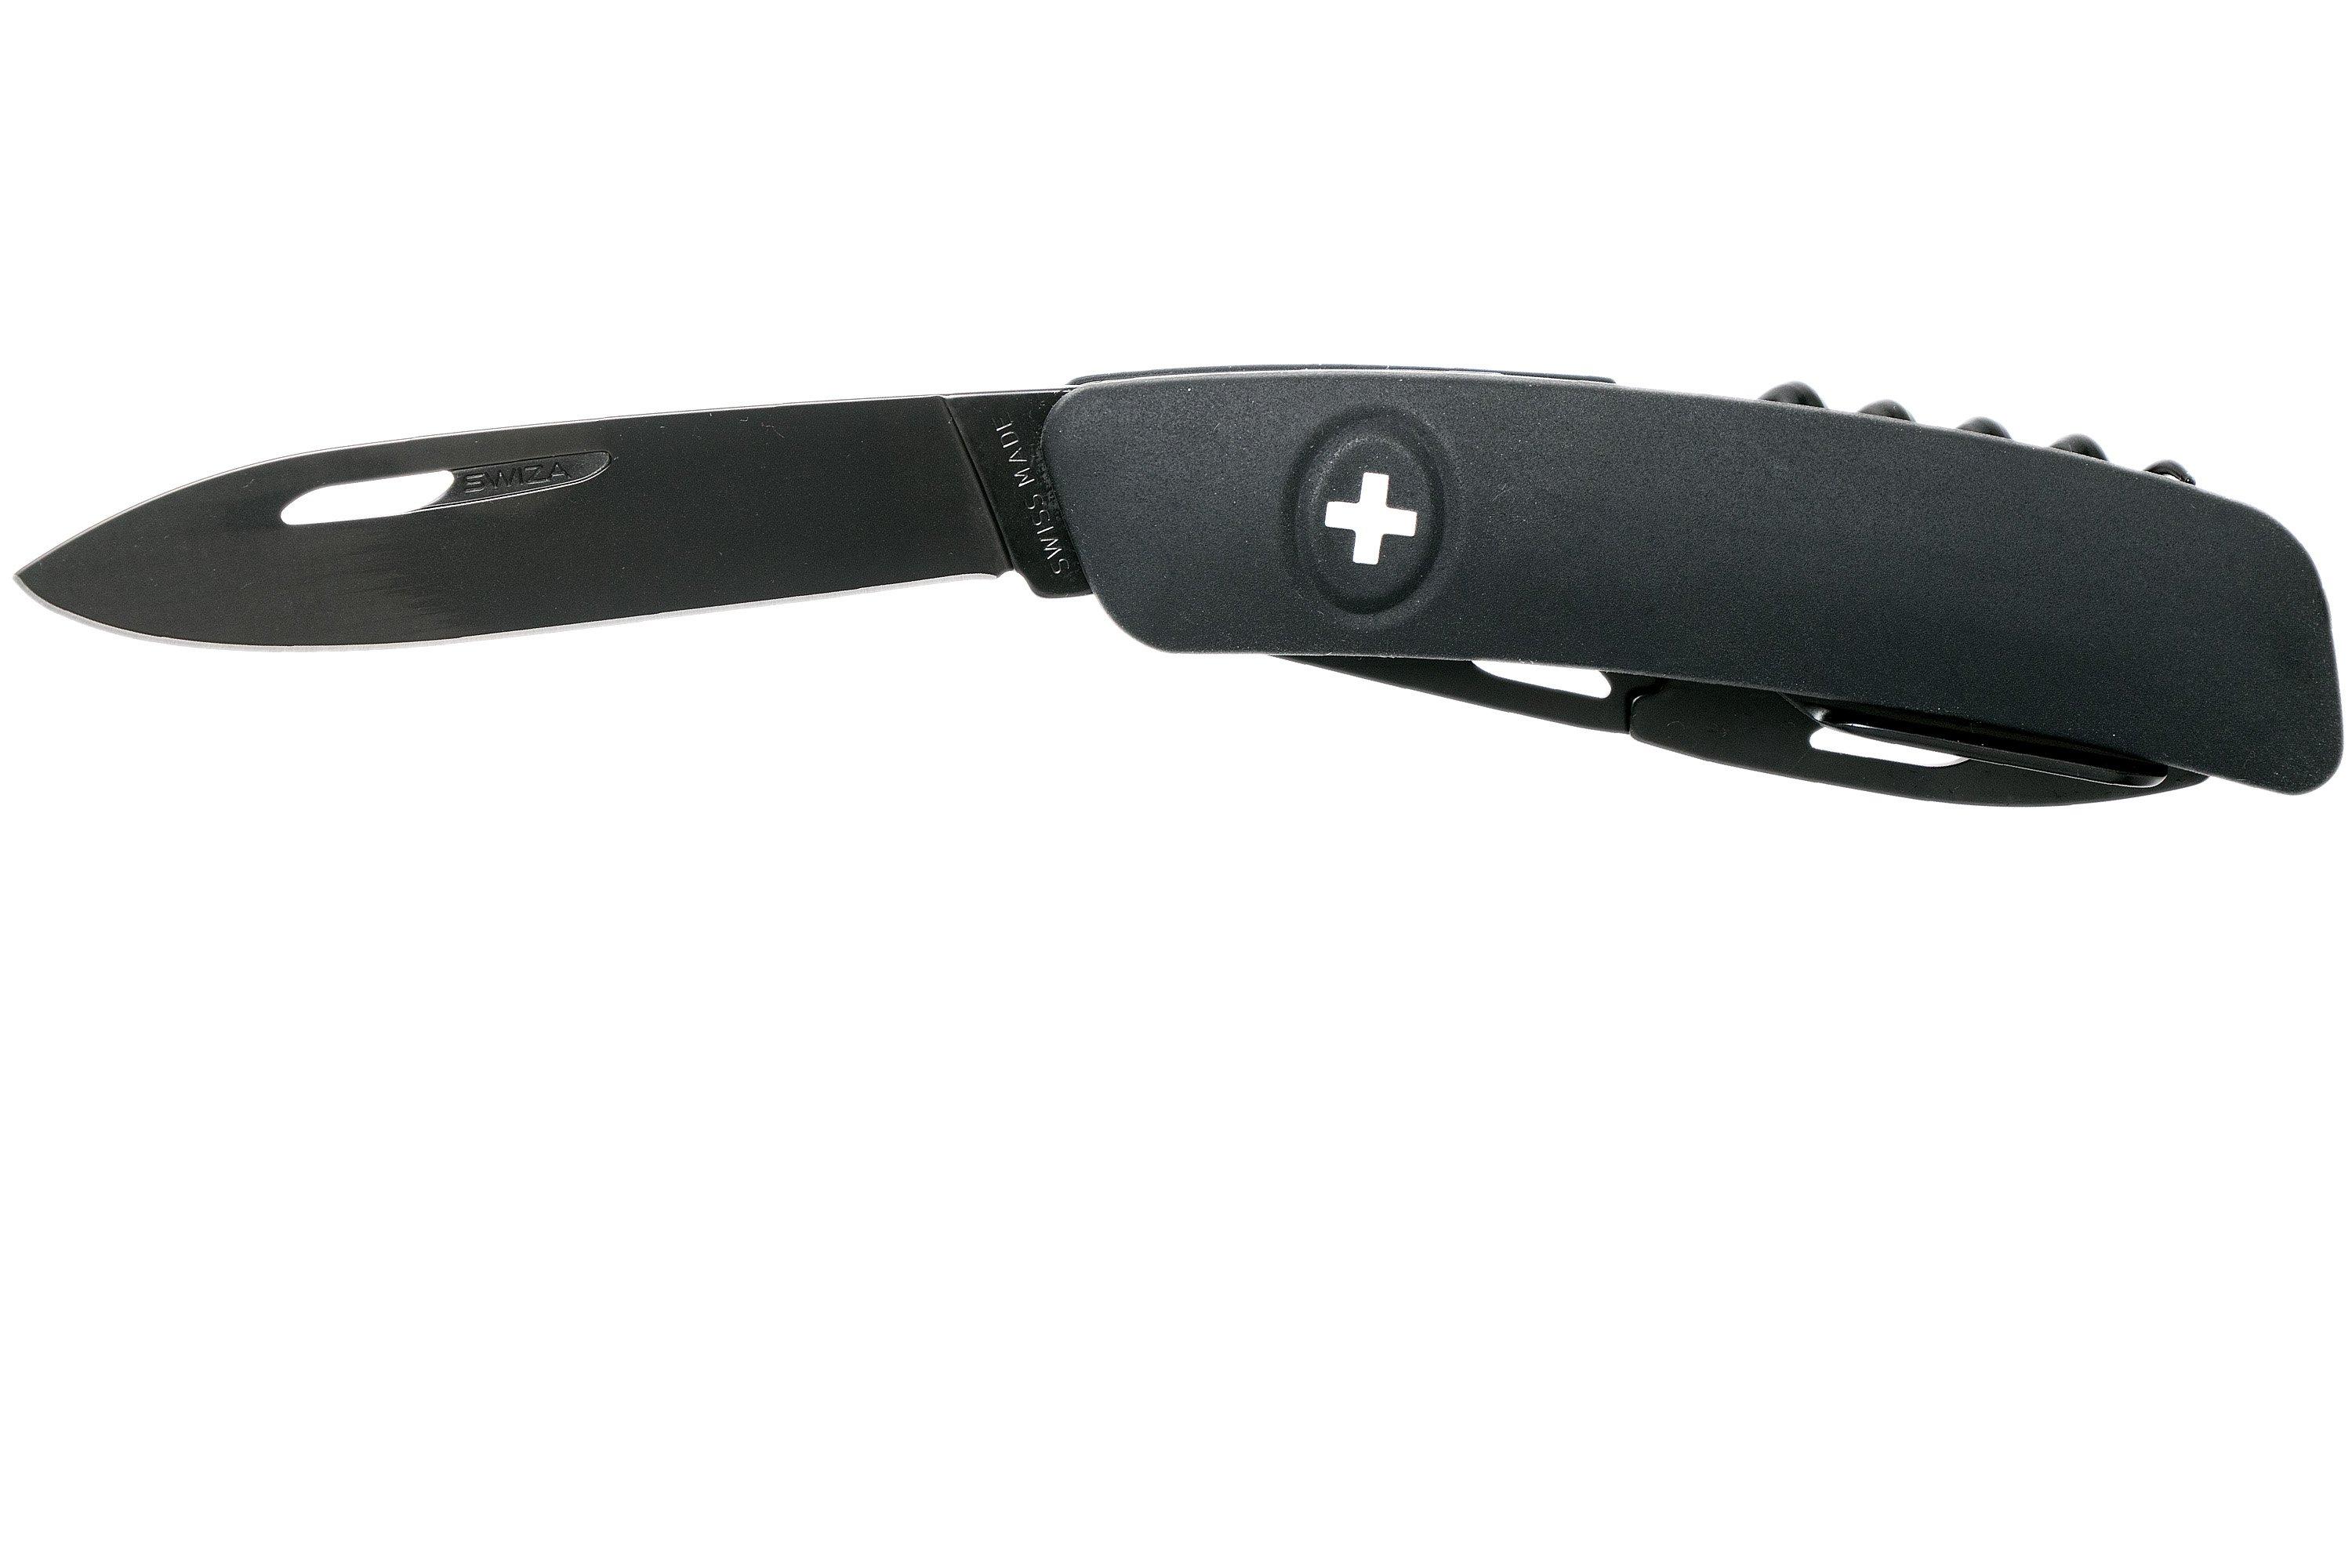  D03 All black Swiss pocket knife, black | Advantageously shopping .